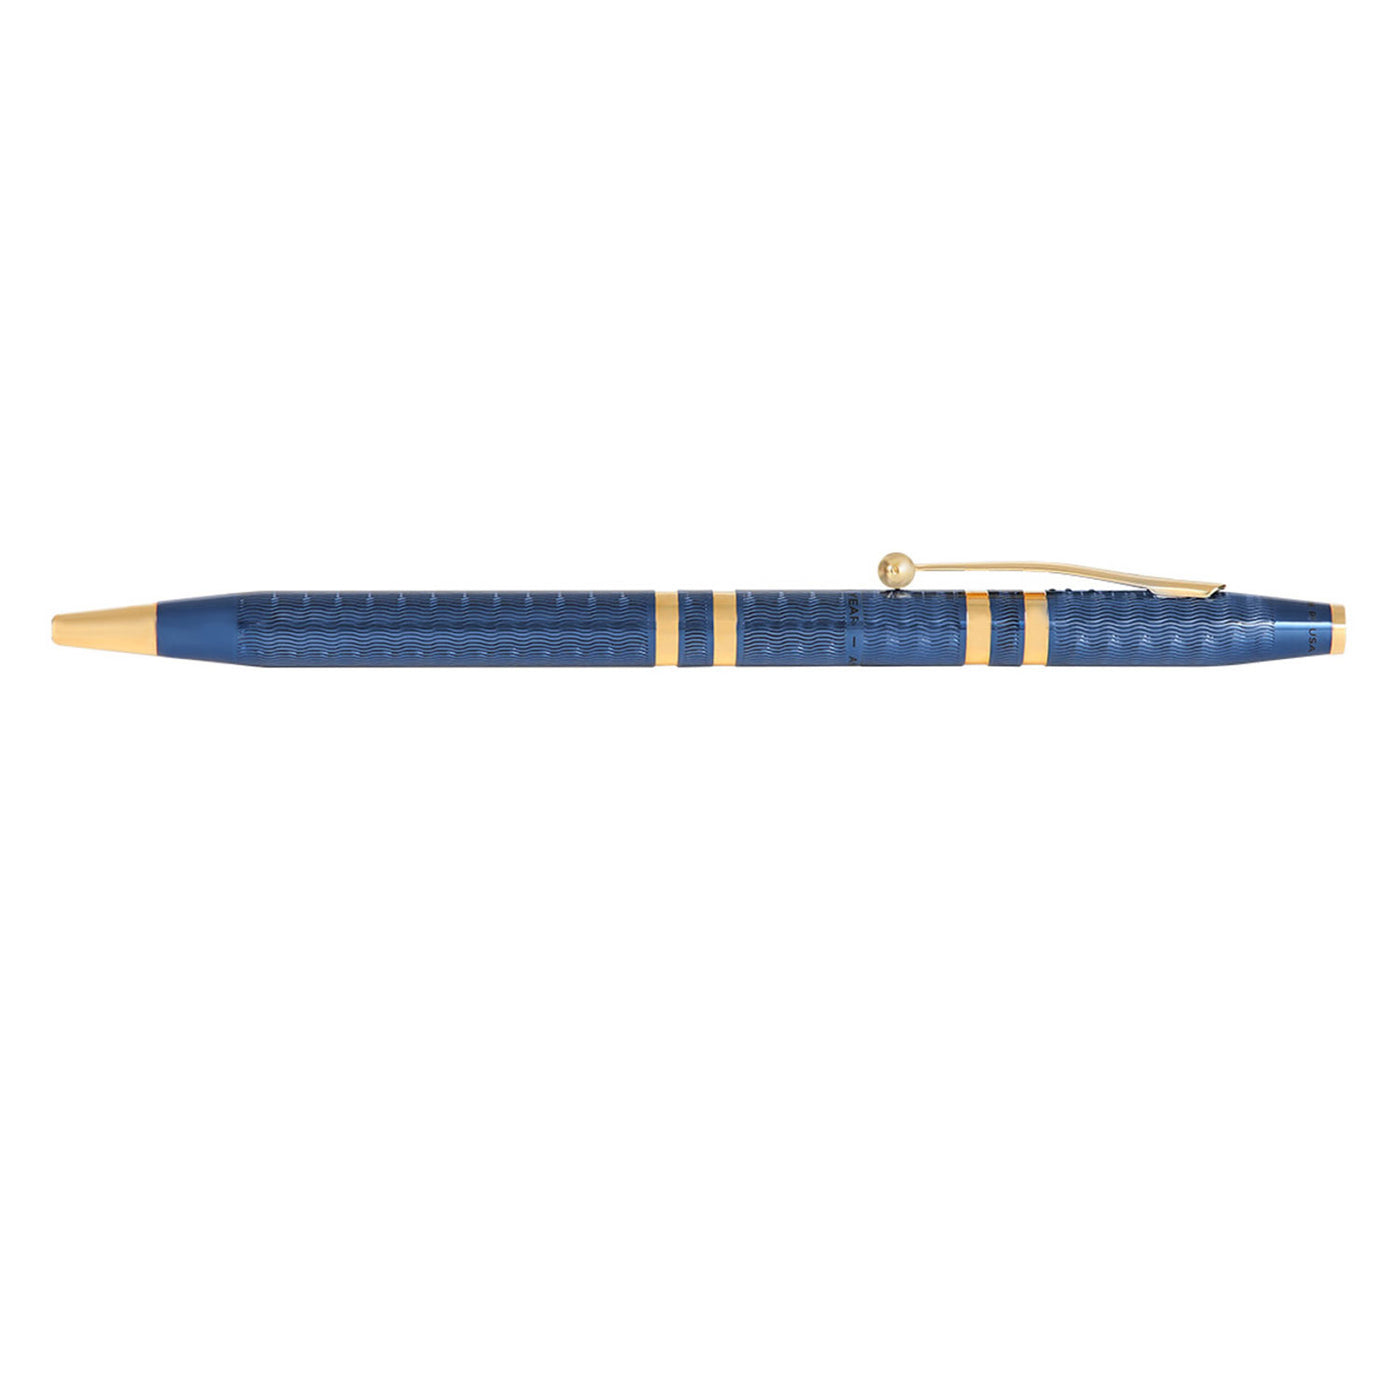 Cross 175th Anniversary Classic Century Ball Pen - Translucent Blue (Special Edition) 4